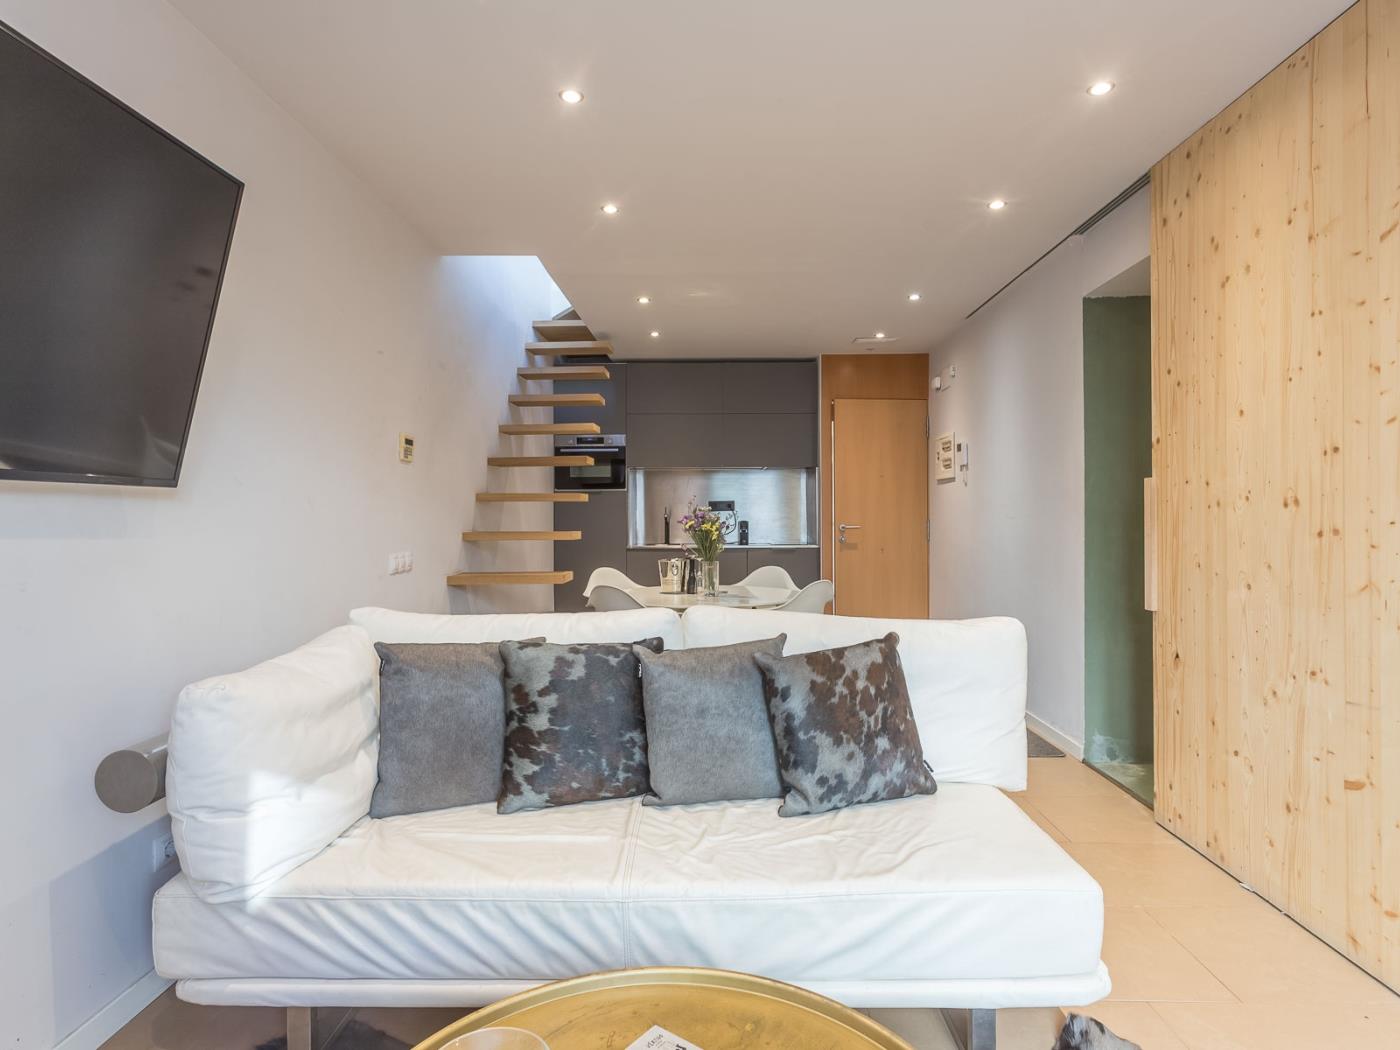 Encantador apartamento con amplia terraza privada en Sant Gervasi por temporadas - My Space Barcelona Apartamentos